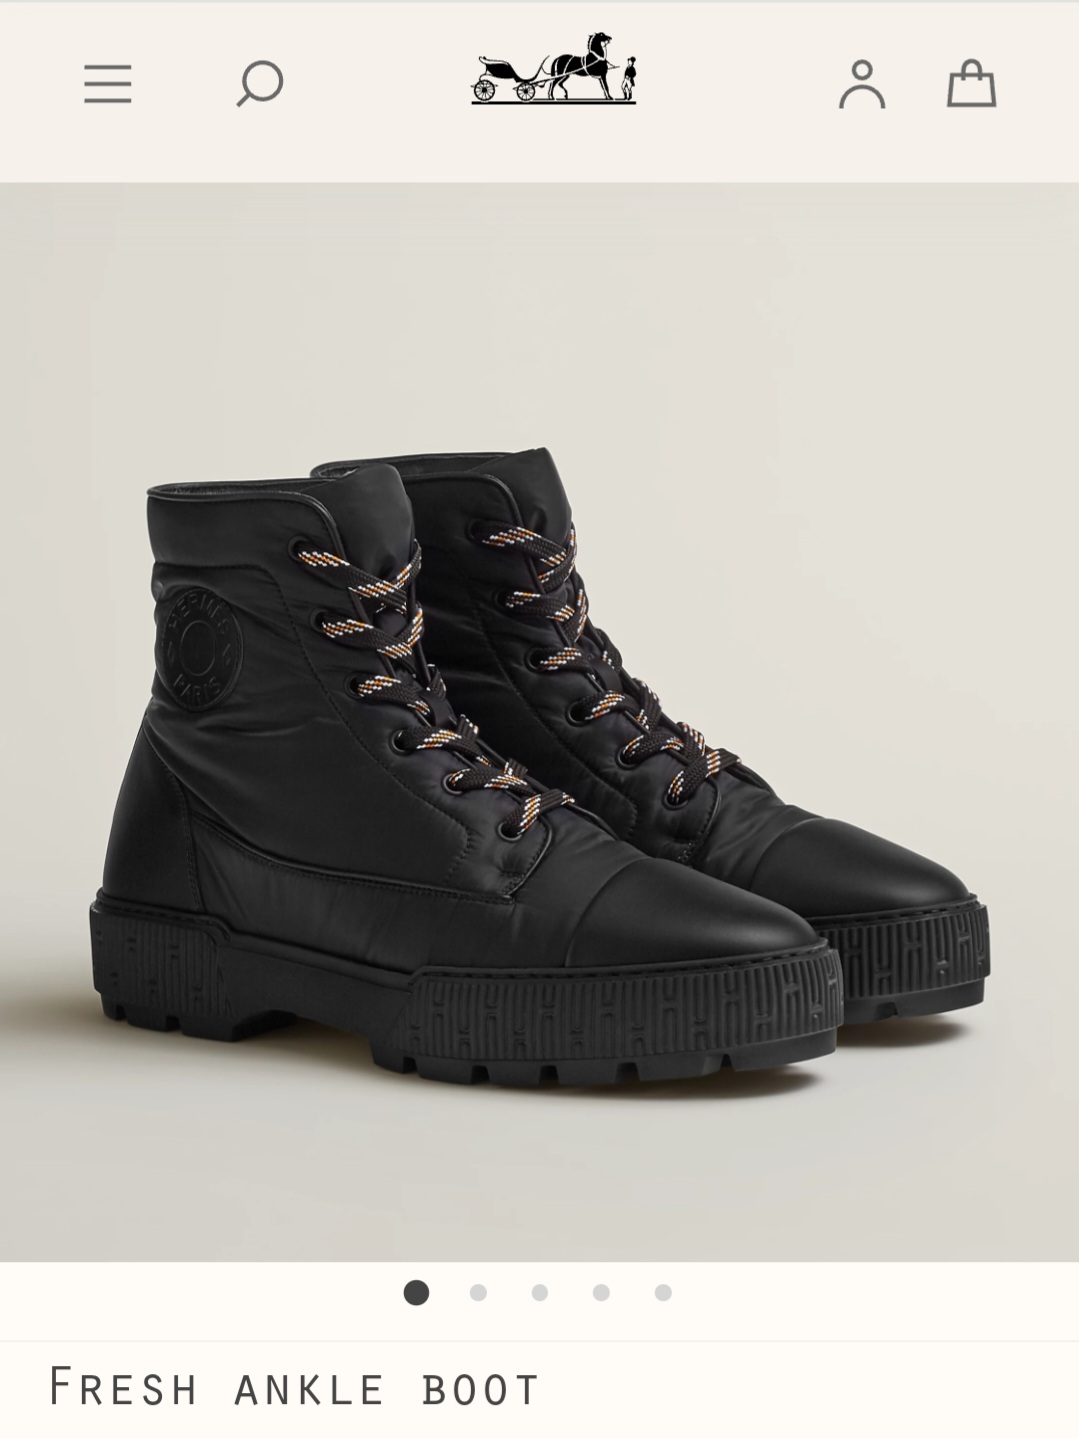 Hermes Fresh ankle boot shoe